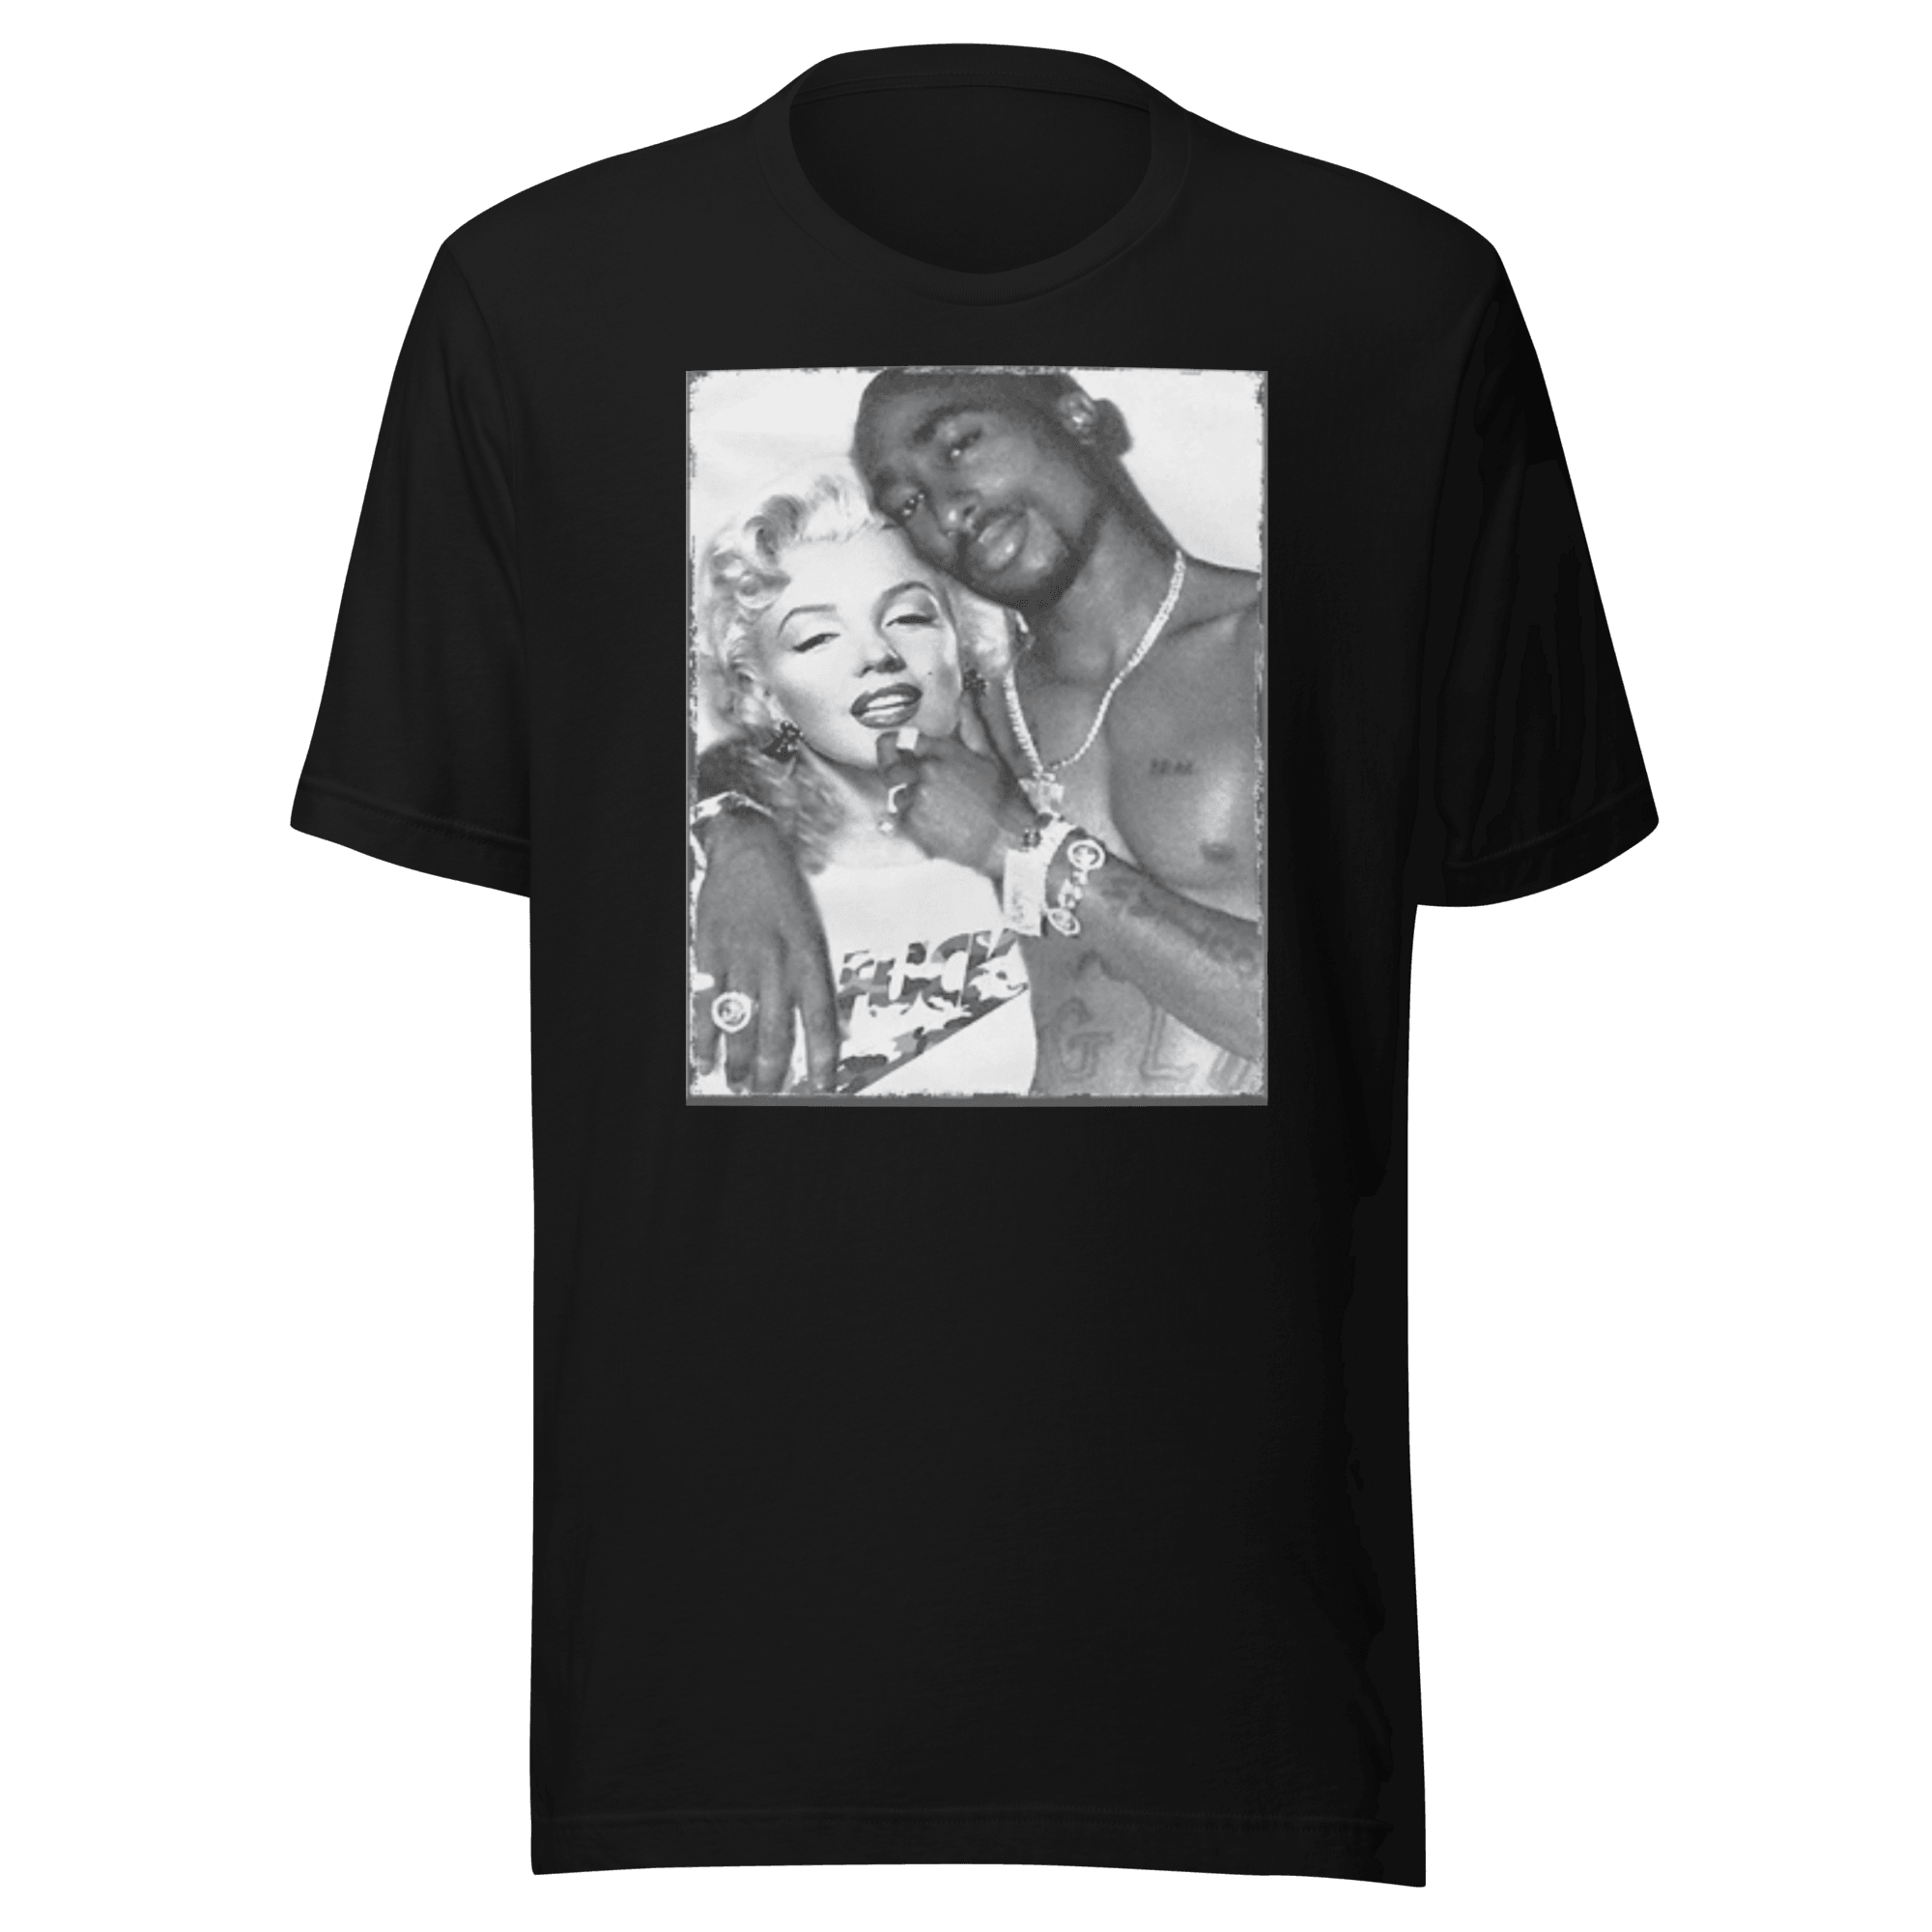 Iconic T-shirt Famous 50's Star Portrait With Decease Rap Artist Short Sleeve Crewneck Ultra Soft Top - TopKoalaTee